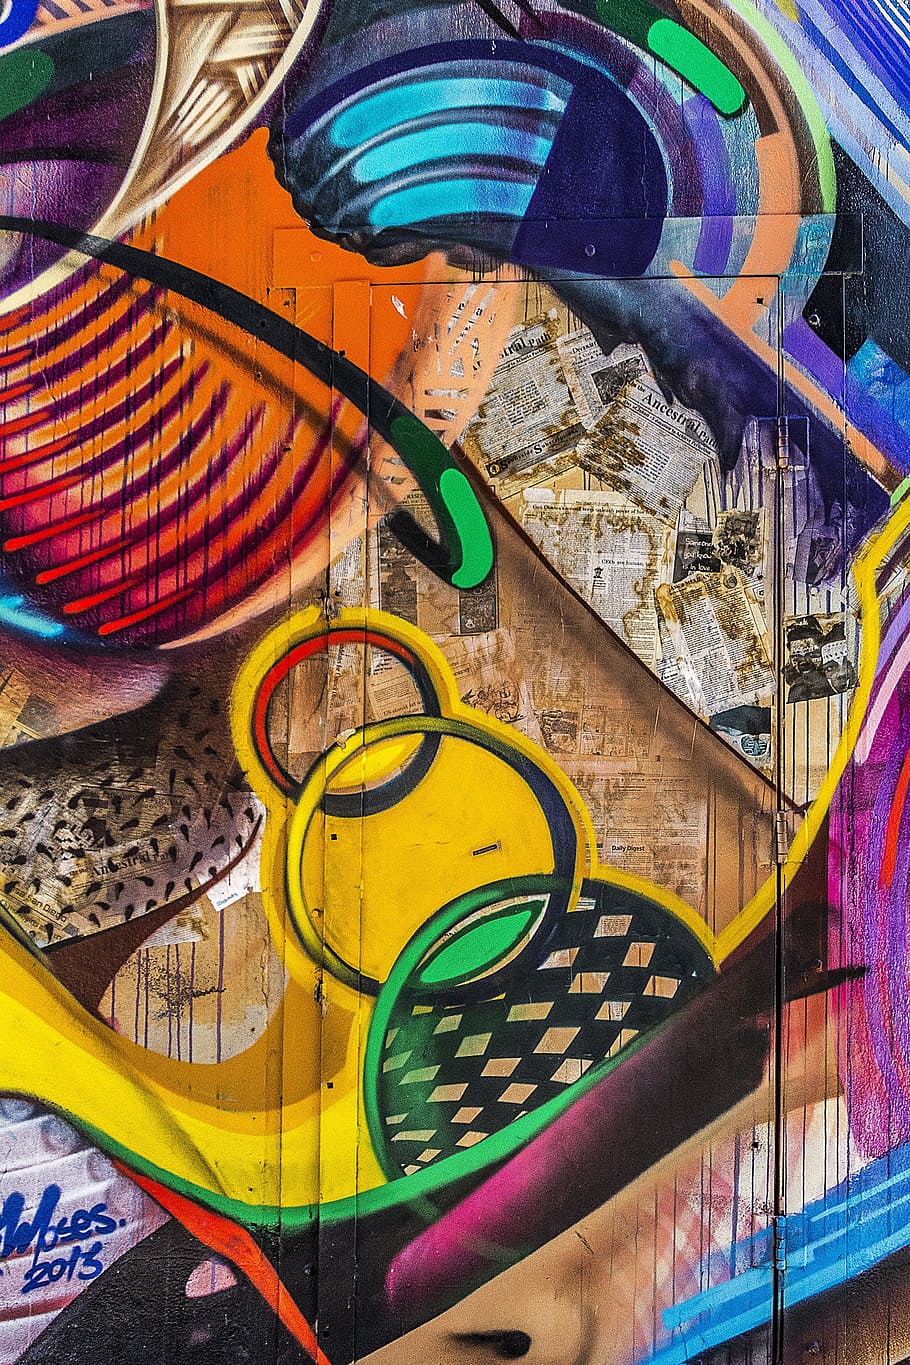 multicolored abstract painting, Graffiti, Background, Grunge, Street Art, graffiti wall, graffiti art, artistic, painted, spray paint